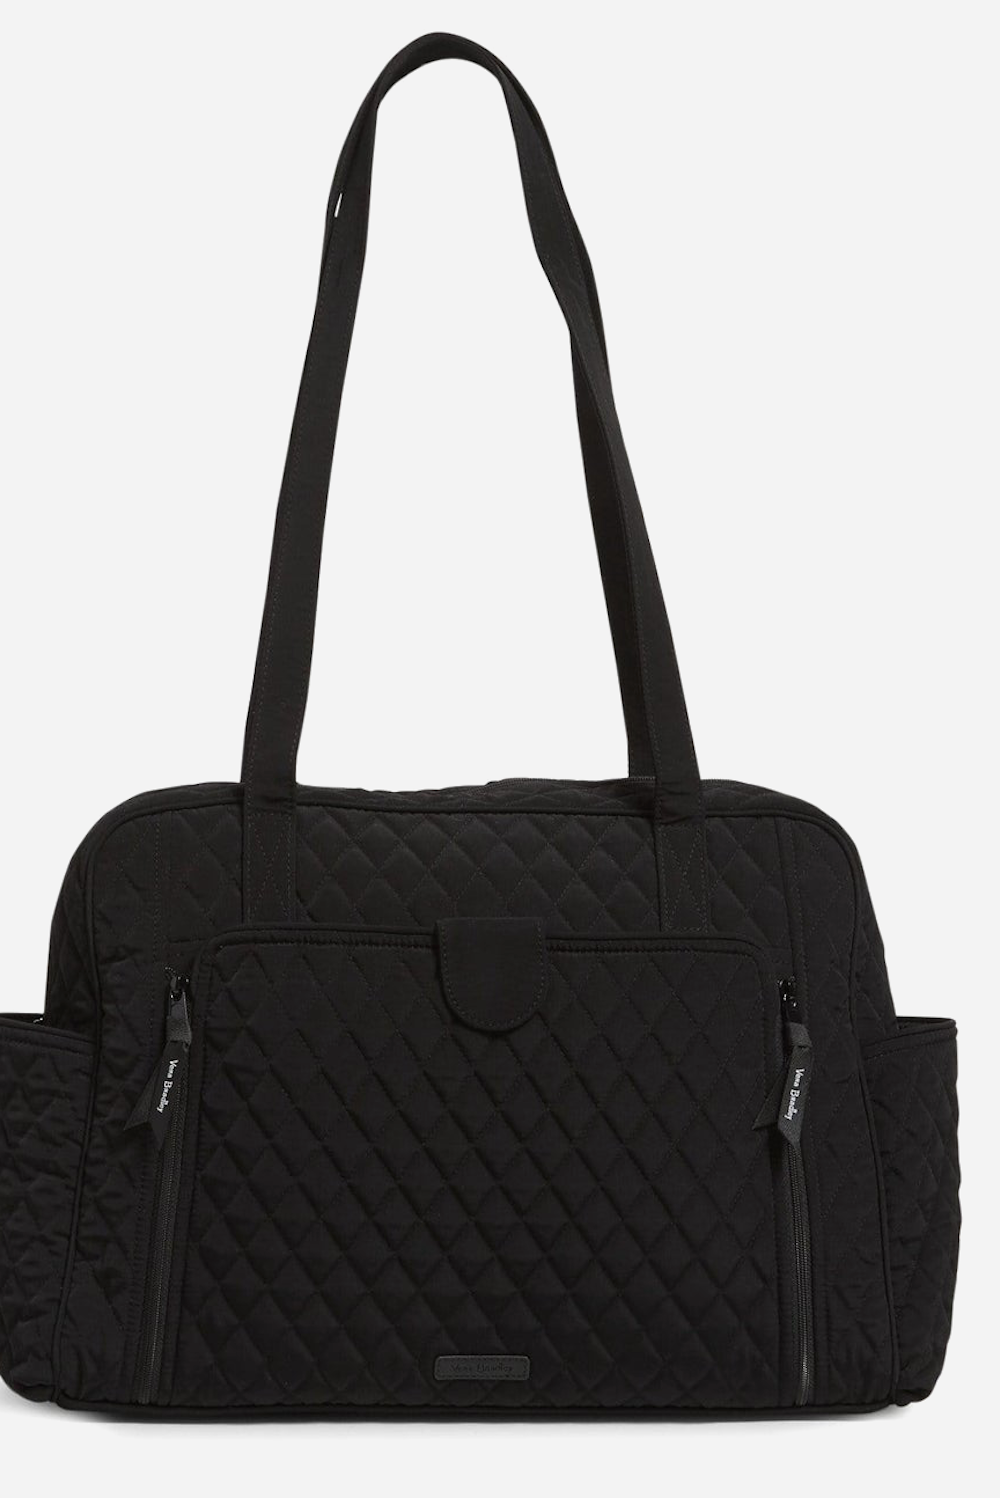 Vera Bradley Factory Style Factory Style Baby Bag Microfiber Classic Black New